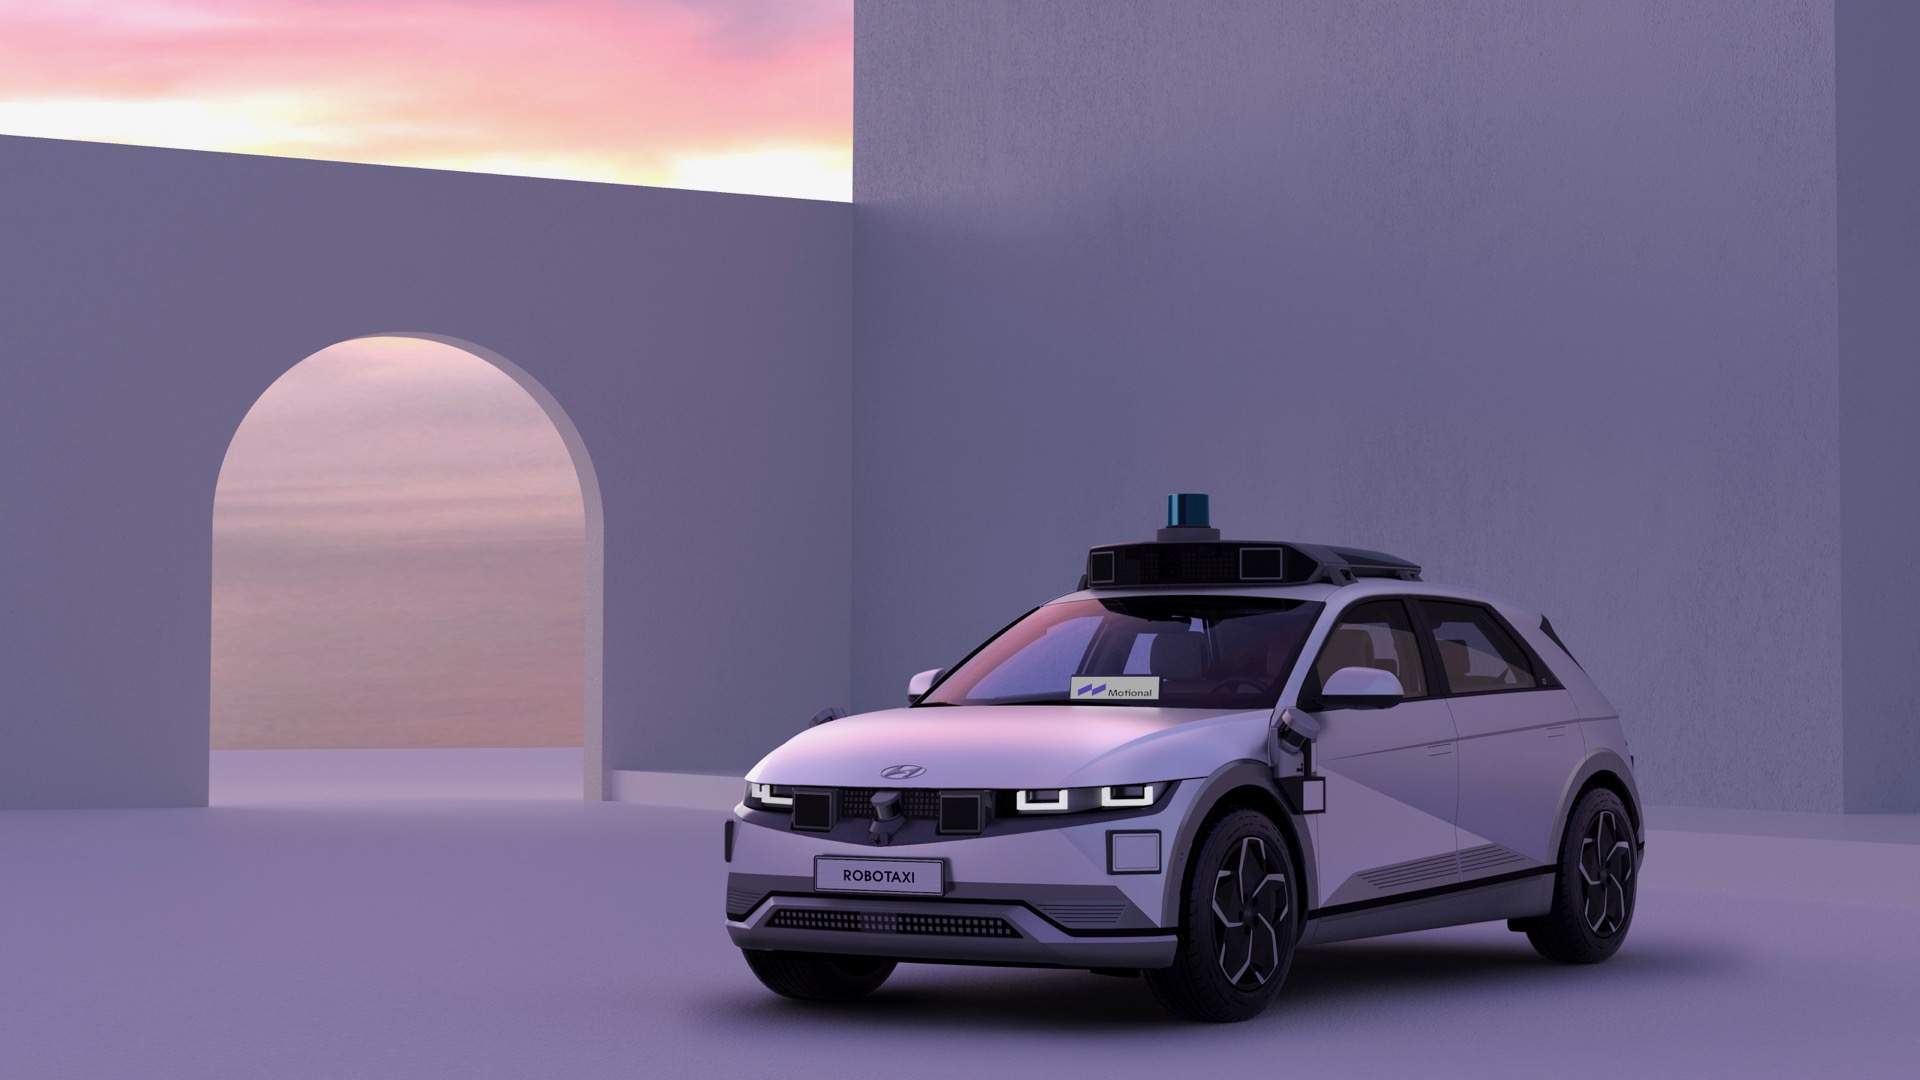 Hyundai Ioniq 5 electric robotaxi revealed with Motional autonomous-driving ventureHyundai Ioniq 5 electric robotaxi revealed with Motional autonomous-driving venture